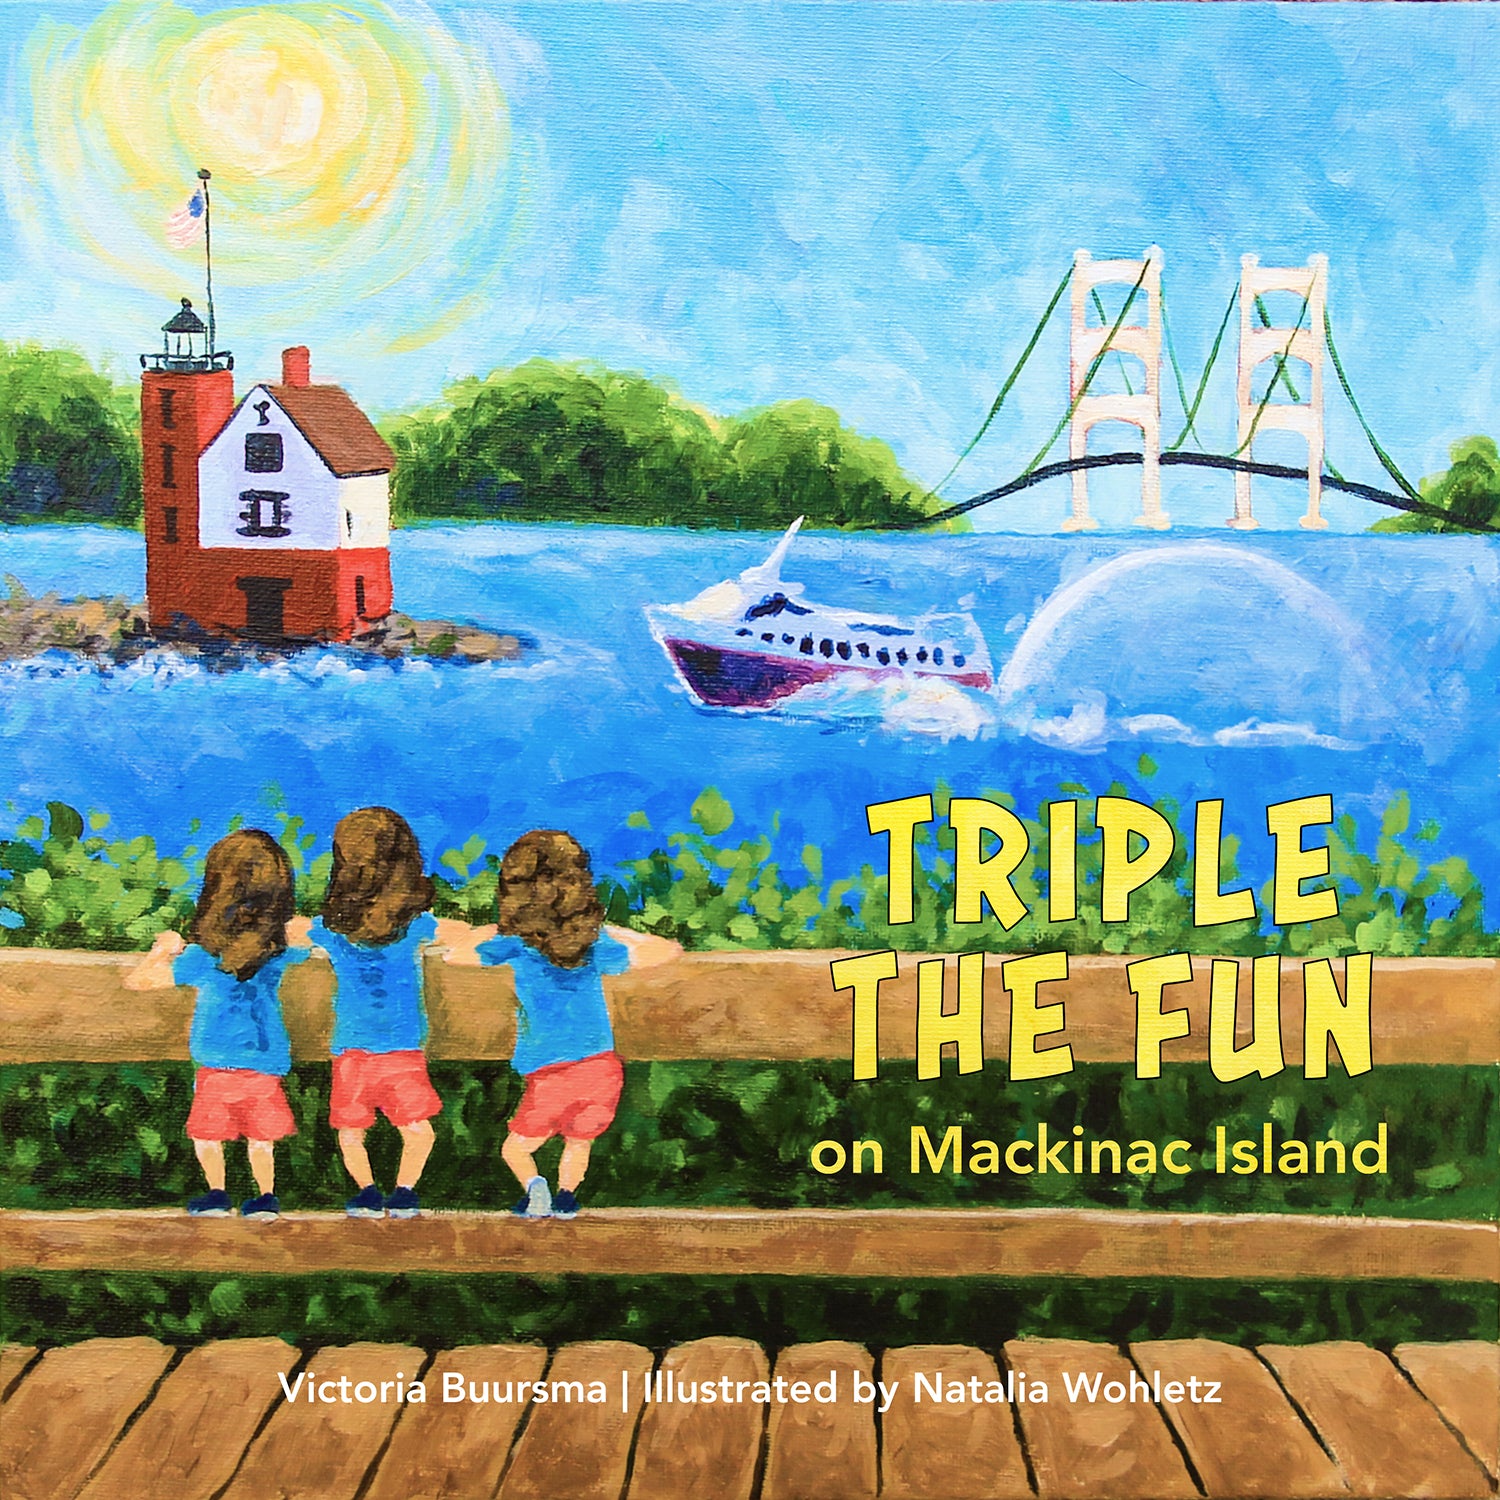 Triple the Fun, a children's Mackinac Island picture book by Victoria Buursma.